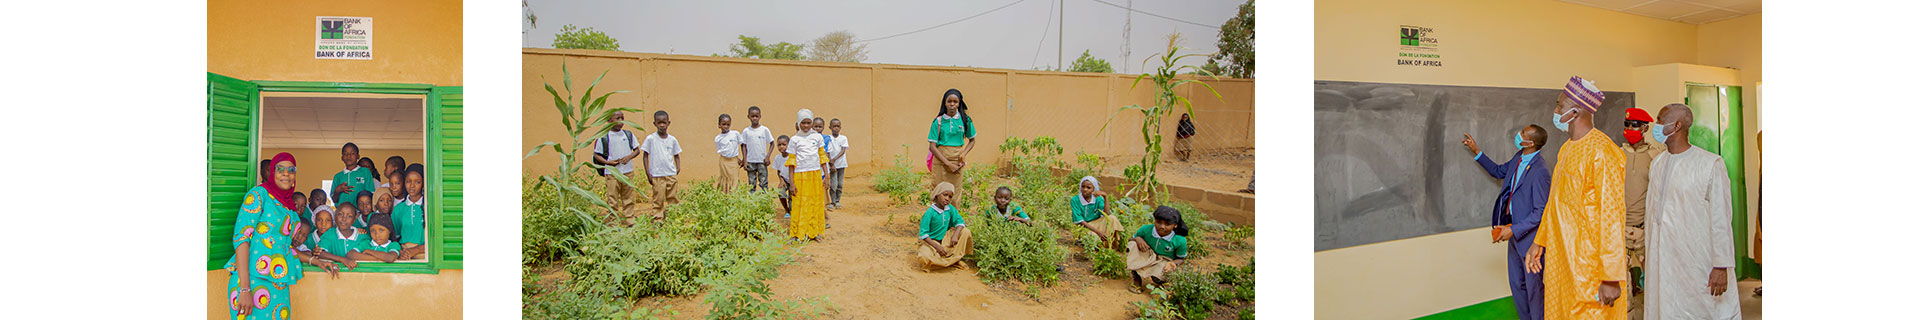 Niger : Renovation of a primary school in Niamey